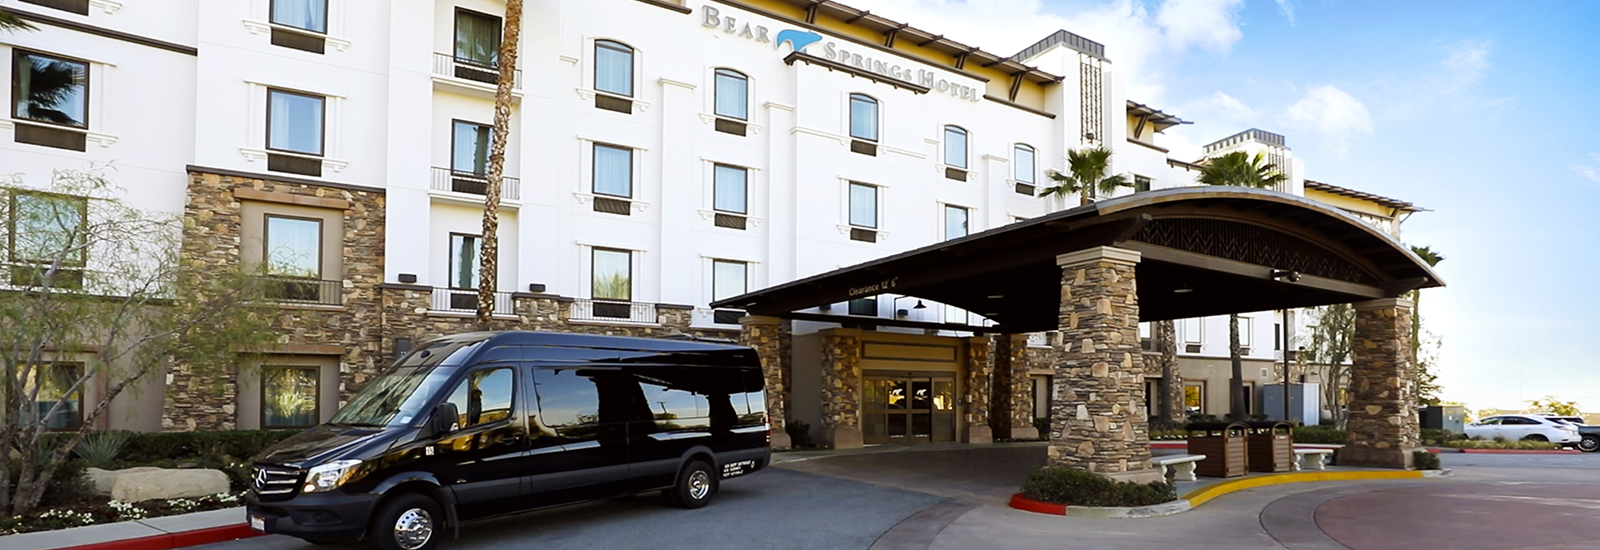 bear springs hotel to san manuel casino